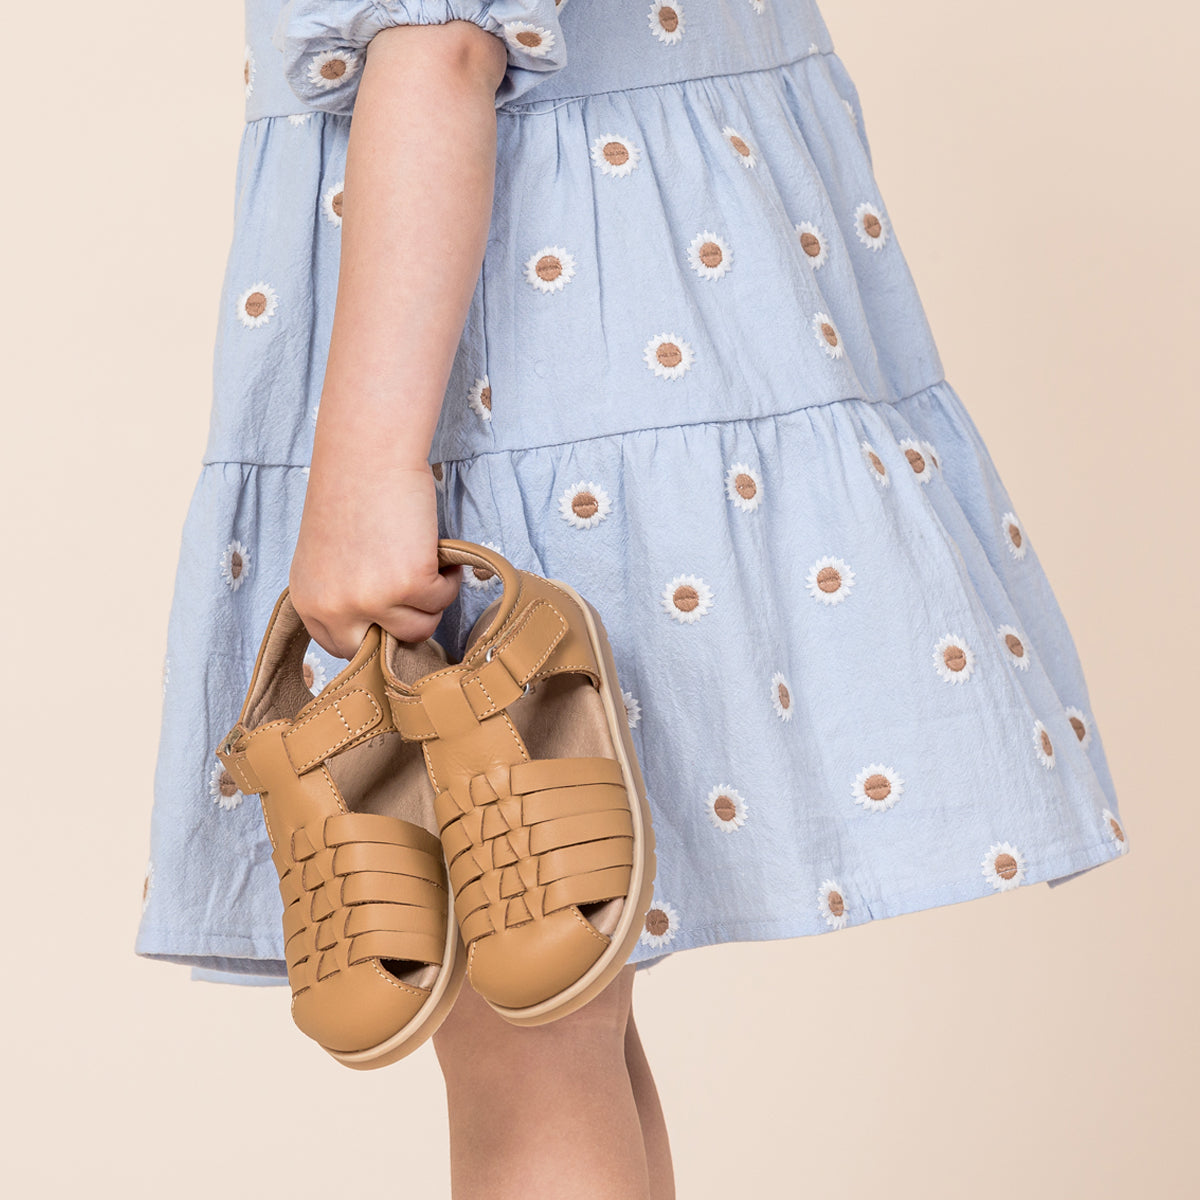 Toddler girl holding pretty brave tan sandals